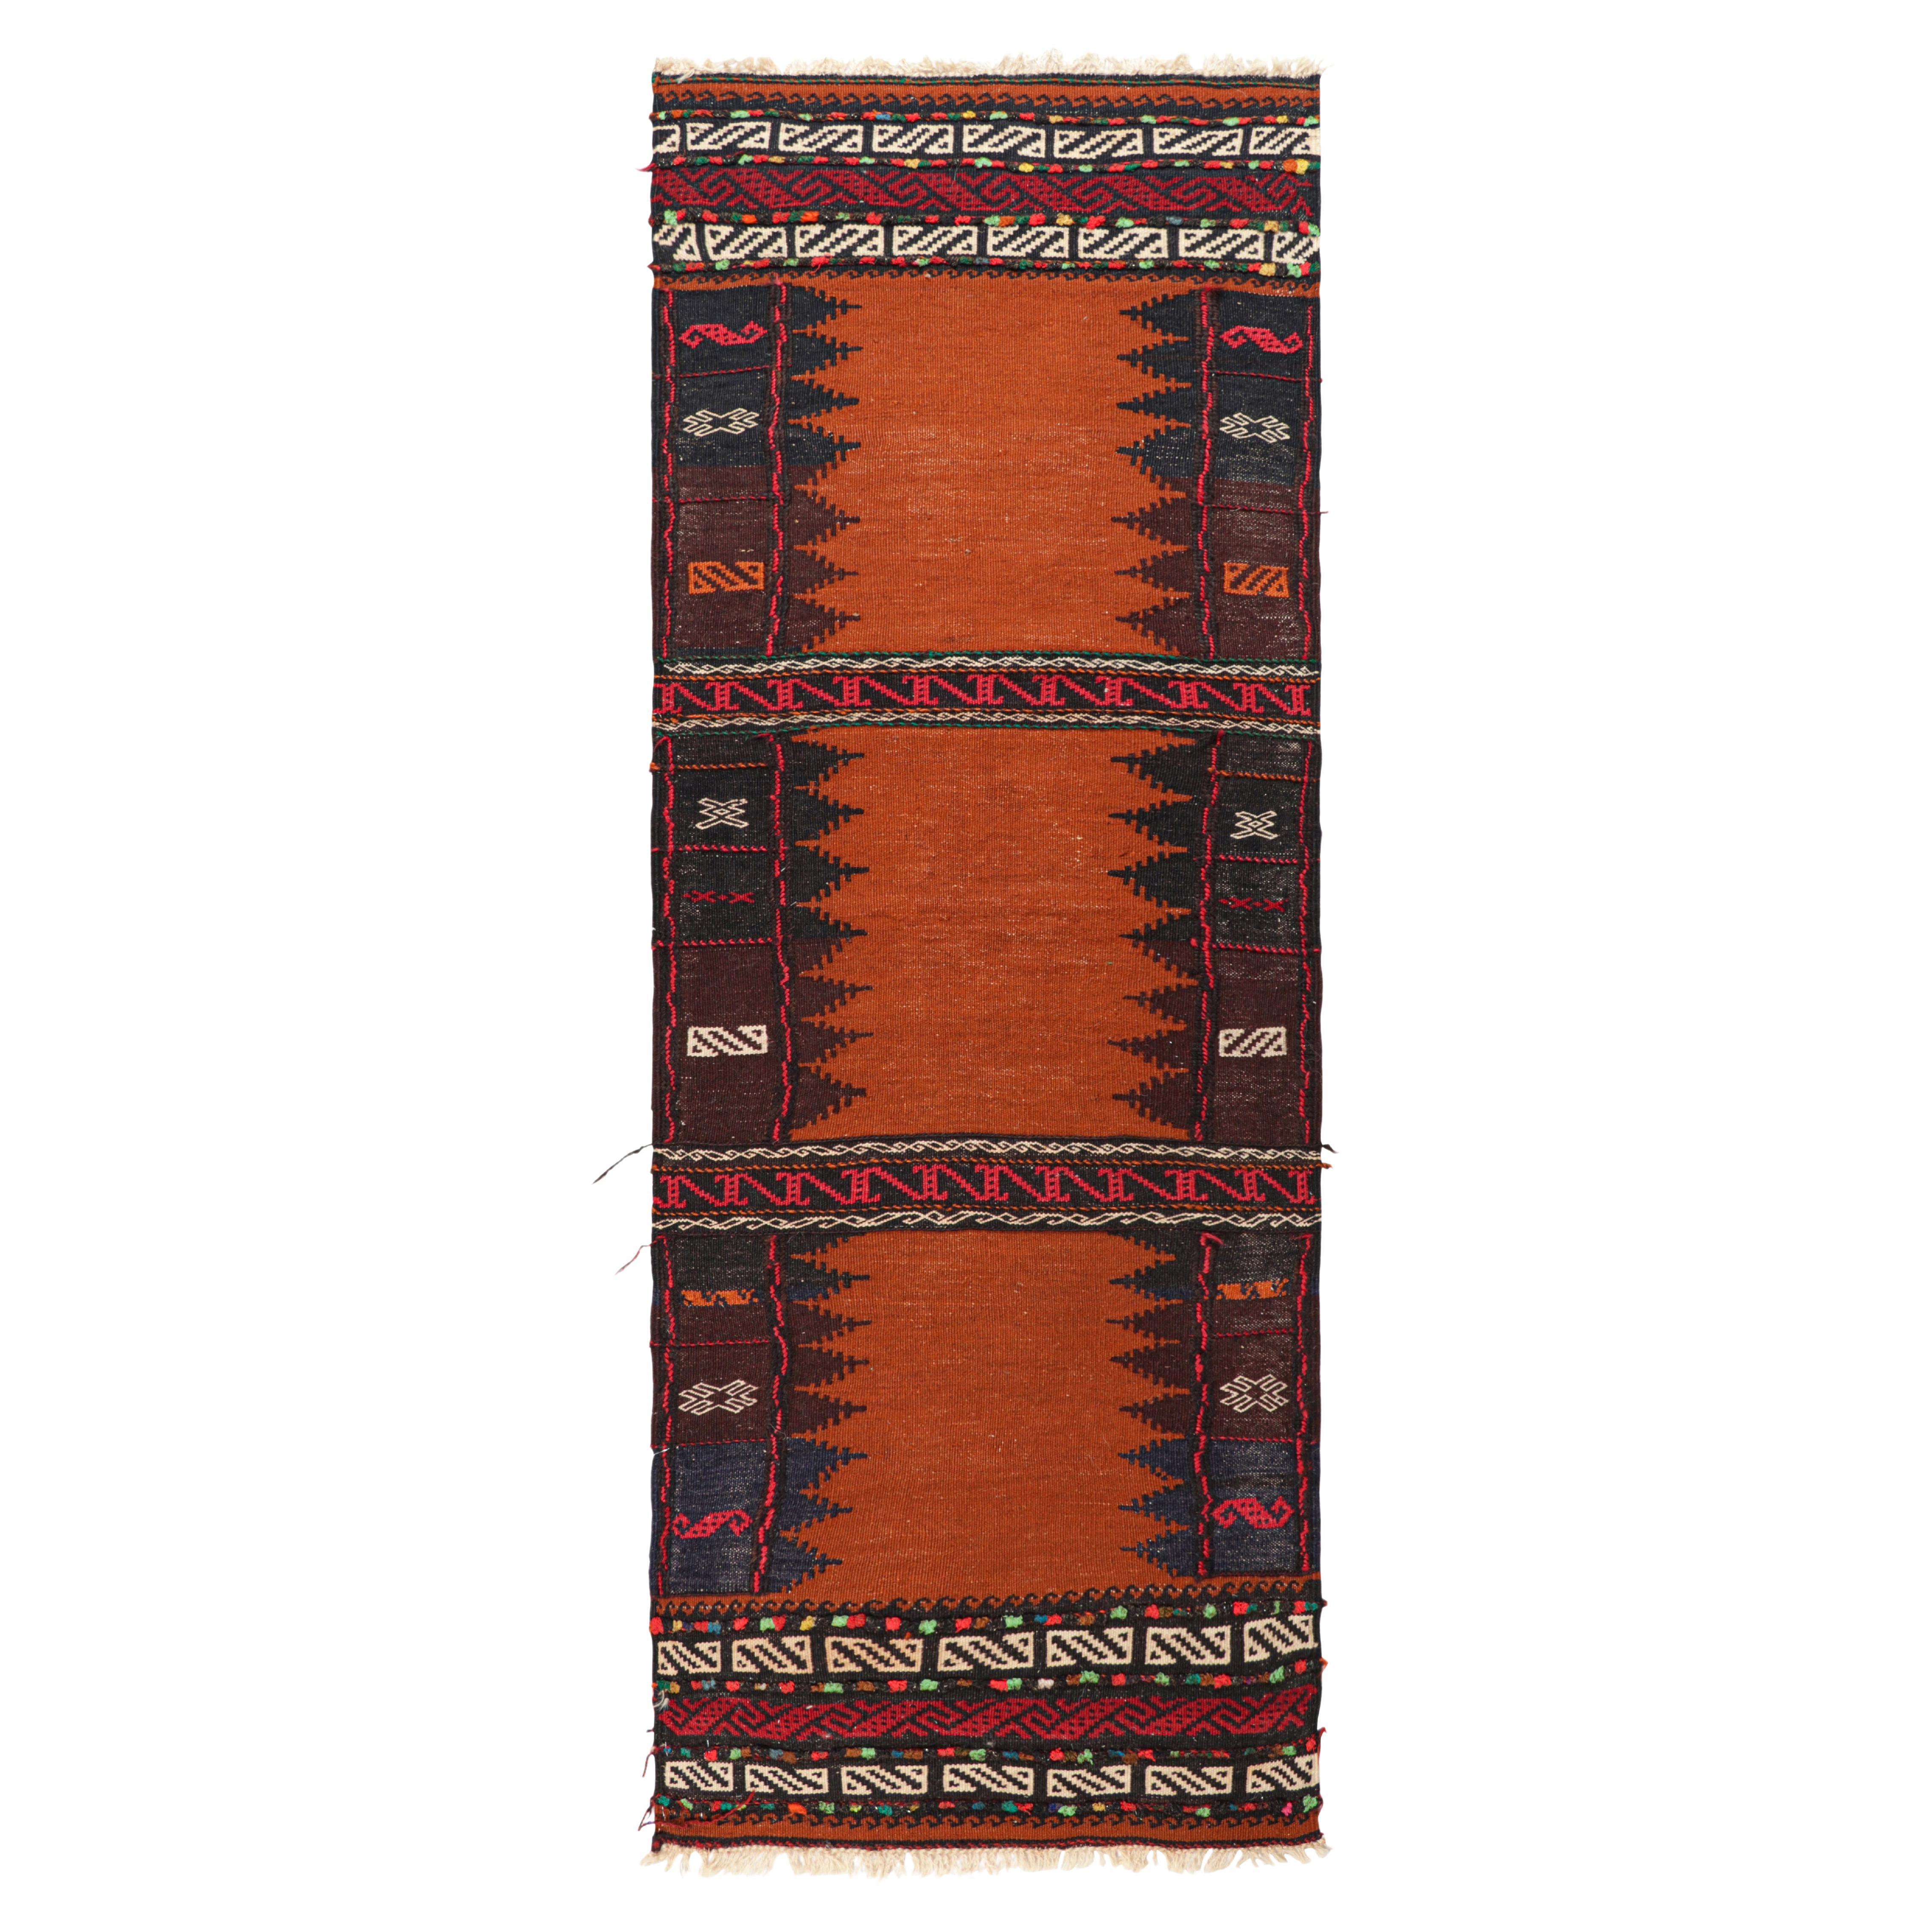 Vintage Afghan Kilim in Rust with Geometric Patterns, from Rug & Kilim